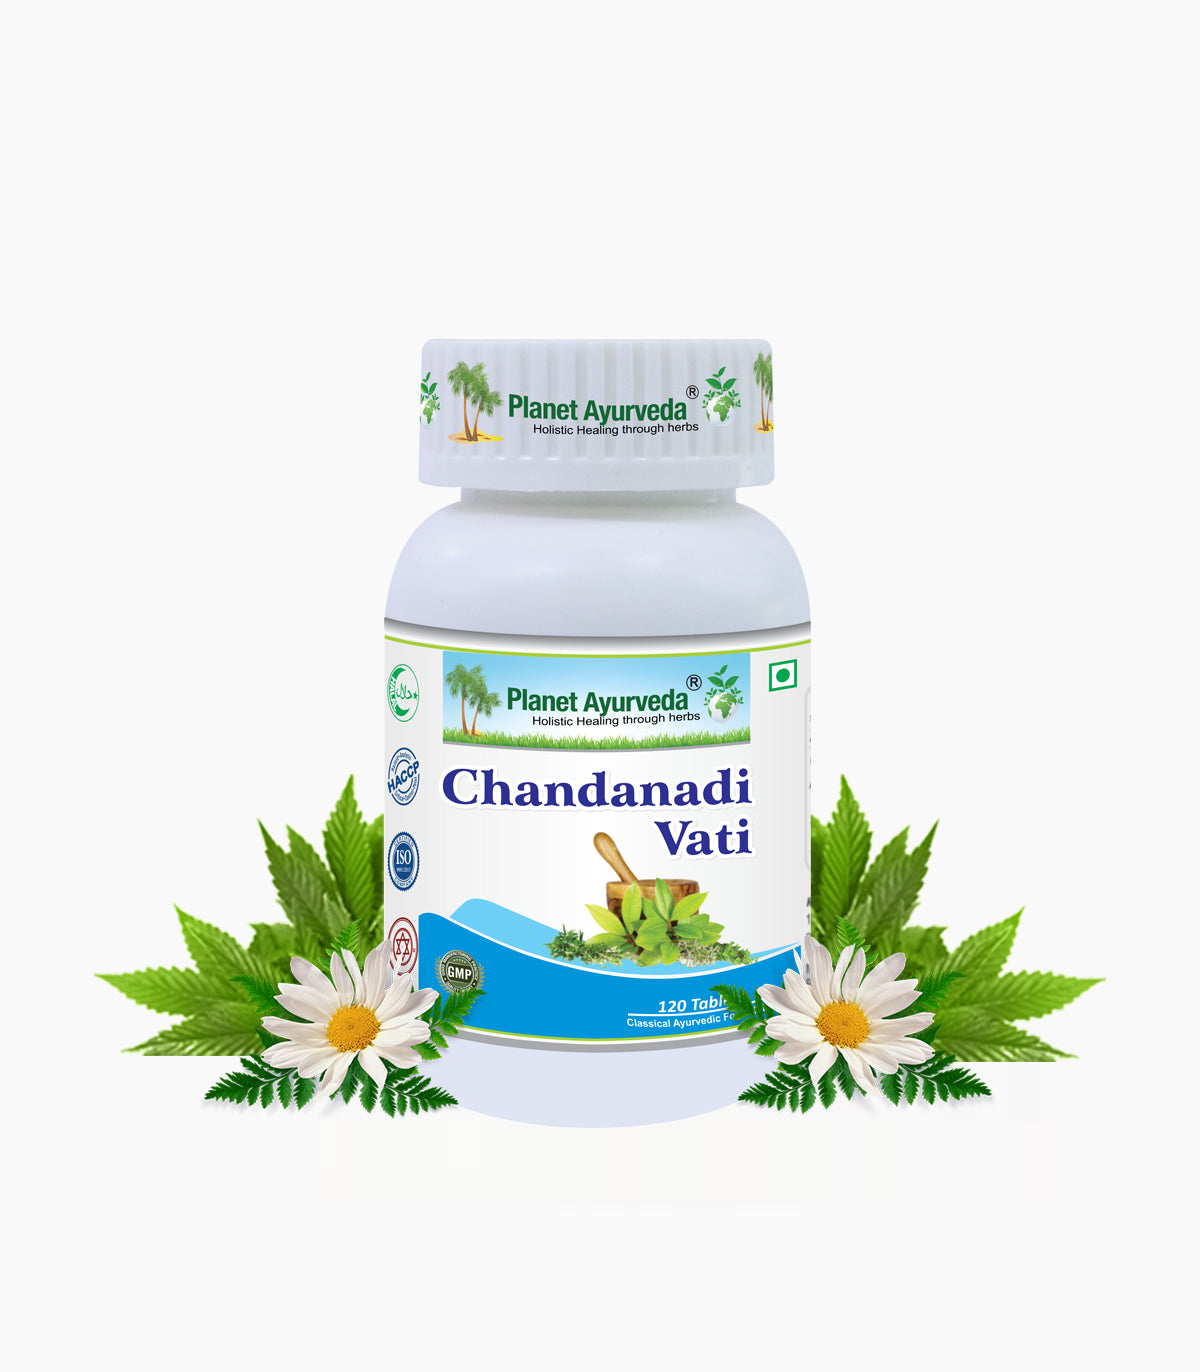 Chandanadi Vati Bottle of 120 Tablet